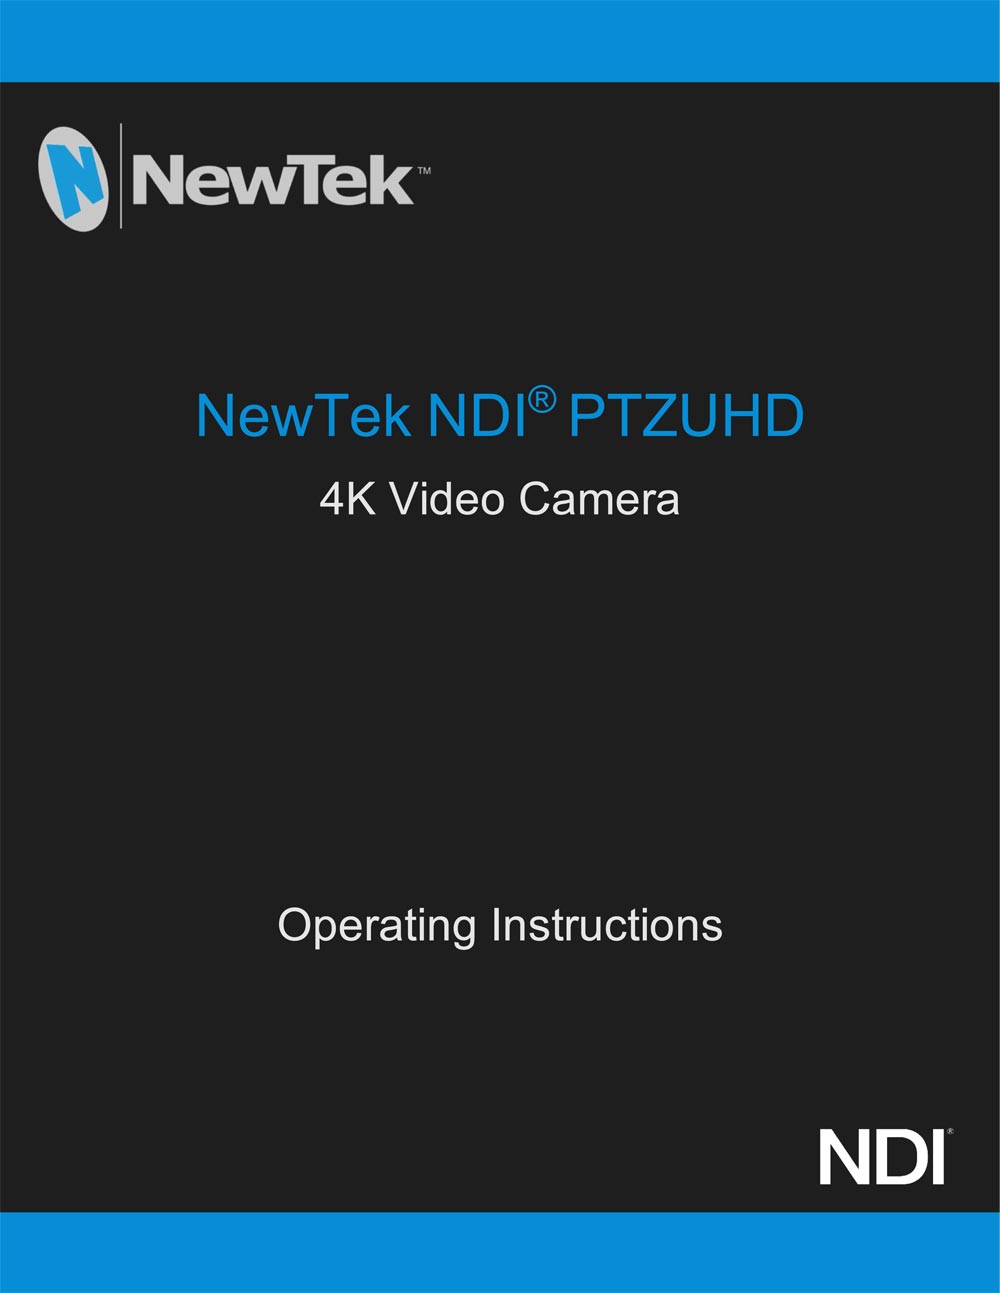 NEWTEK NDIHX-PTZUHD OPERATING INSTRUCTIONS 2020/03/25